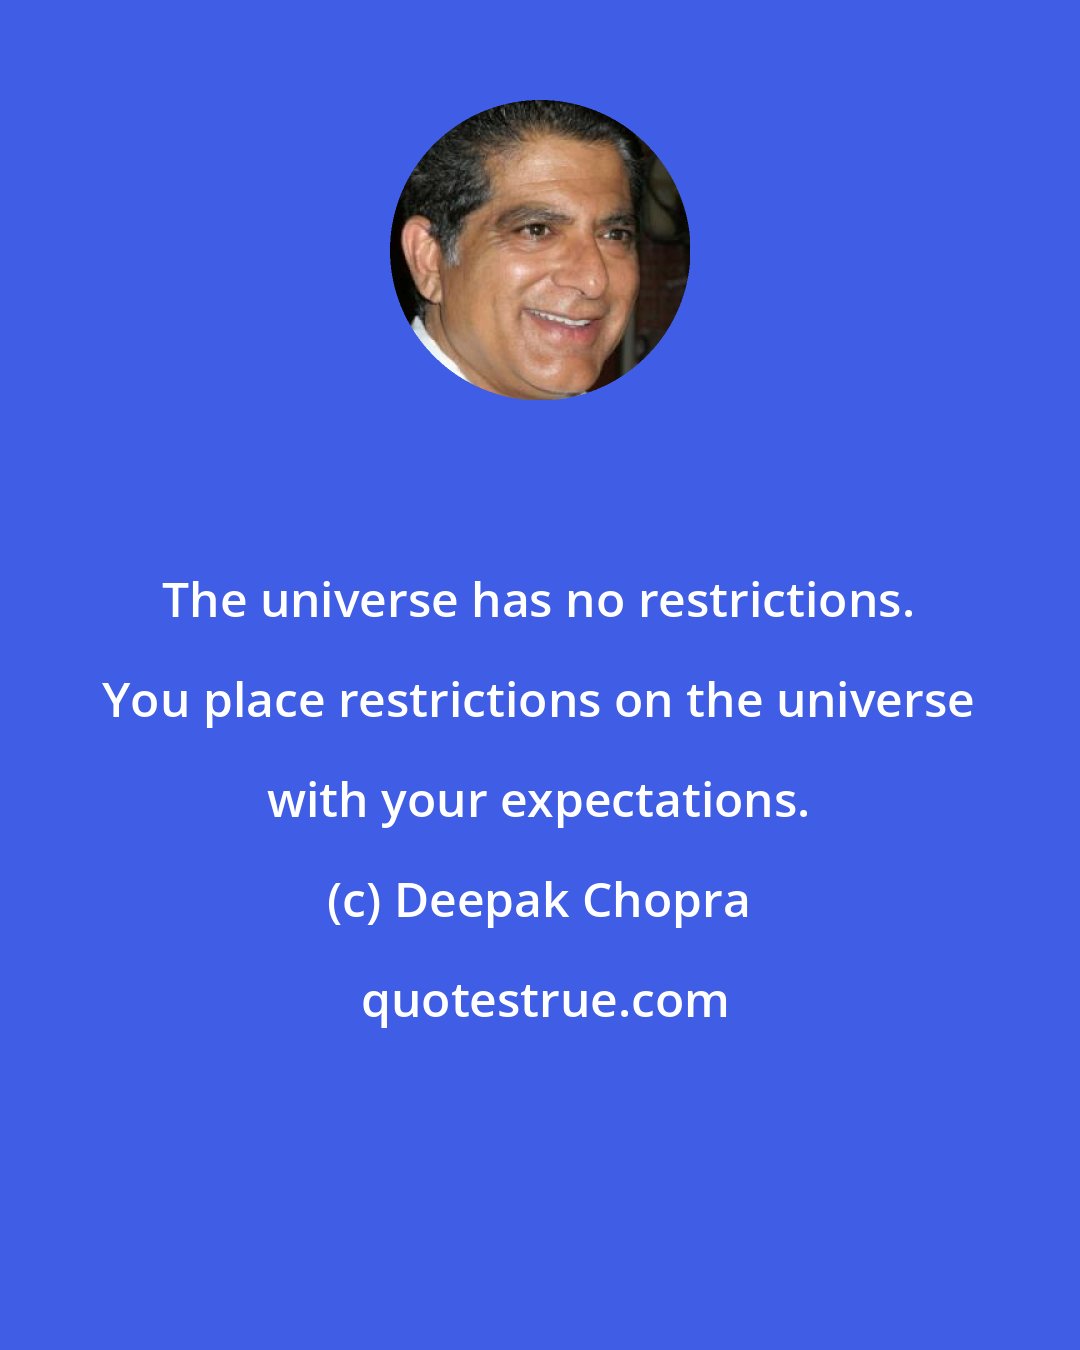 Deepak Chopra: The universe has no restrictions. You place restrictions on the universe with your expectations.